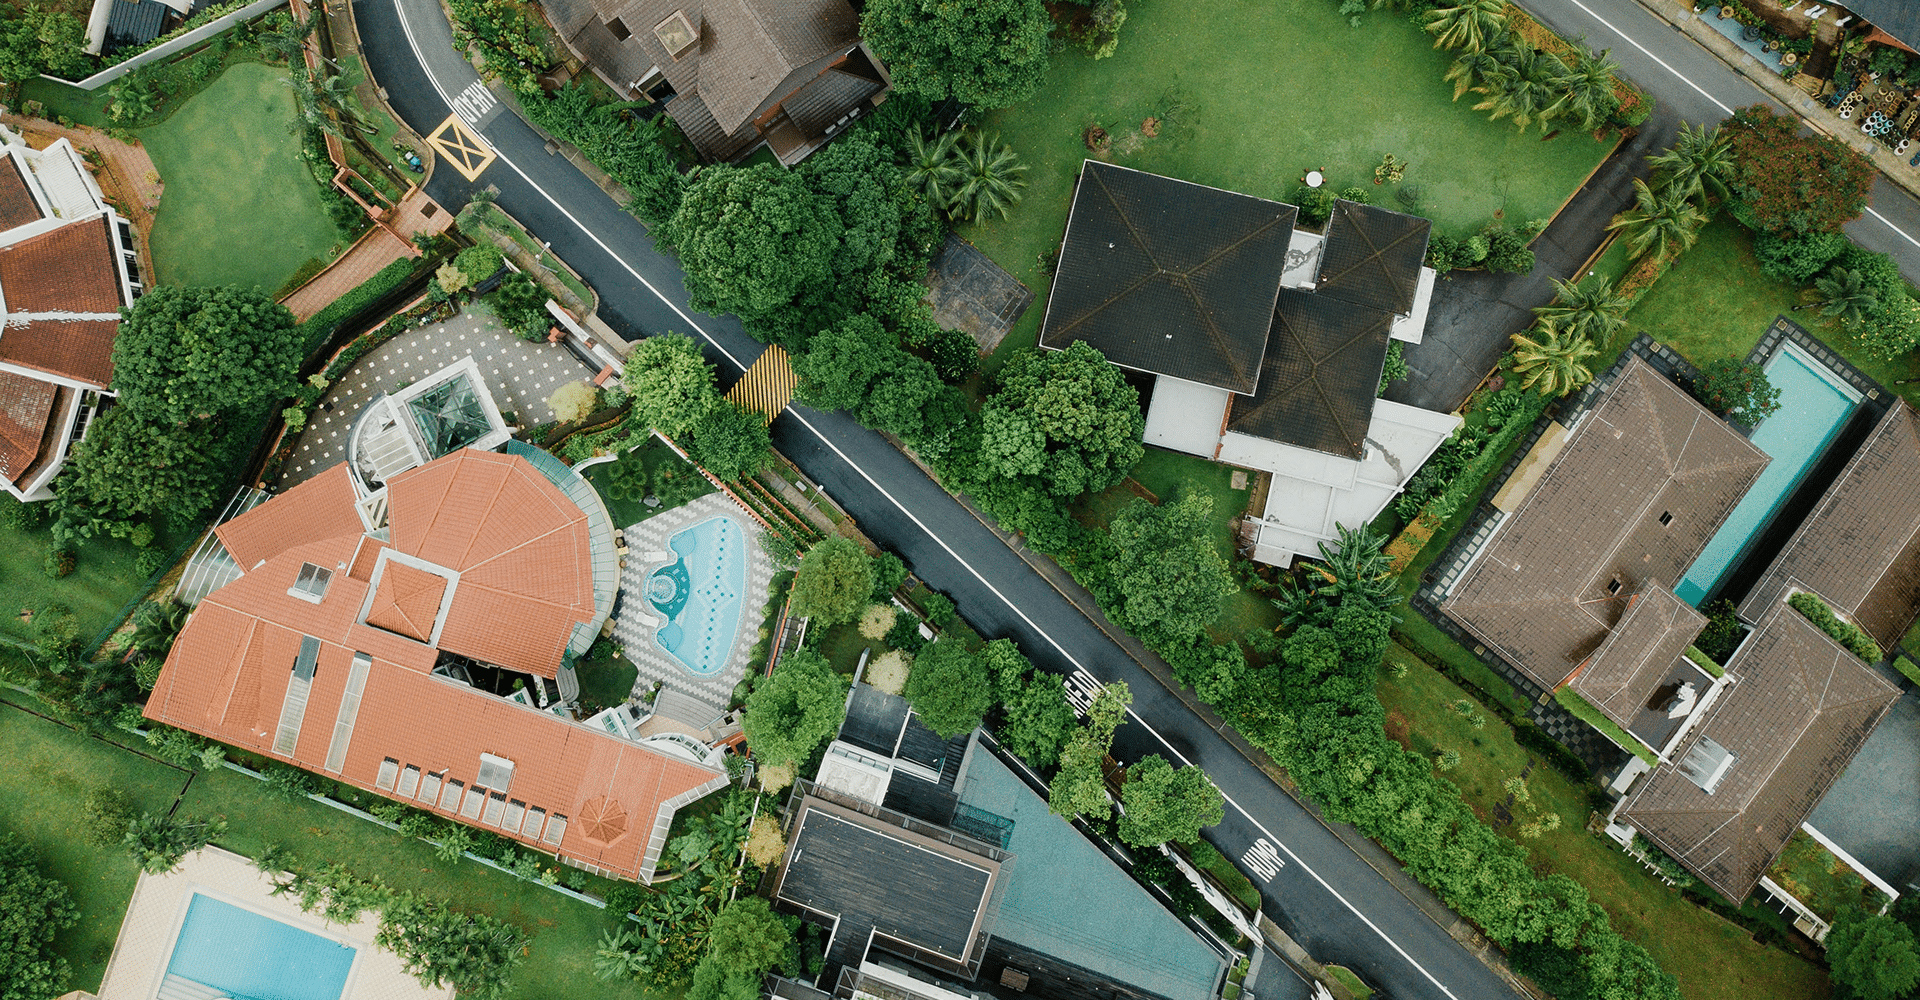 birds eye view of luxury homes with pools in very green lush neighborhood